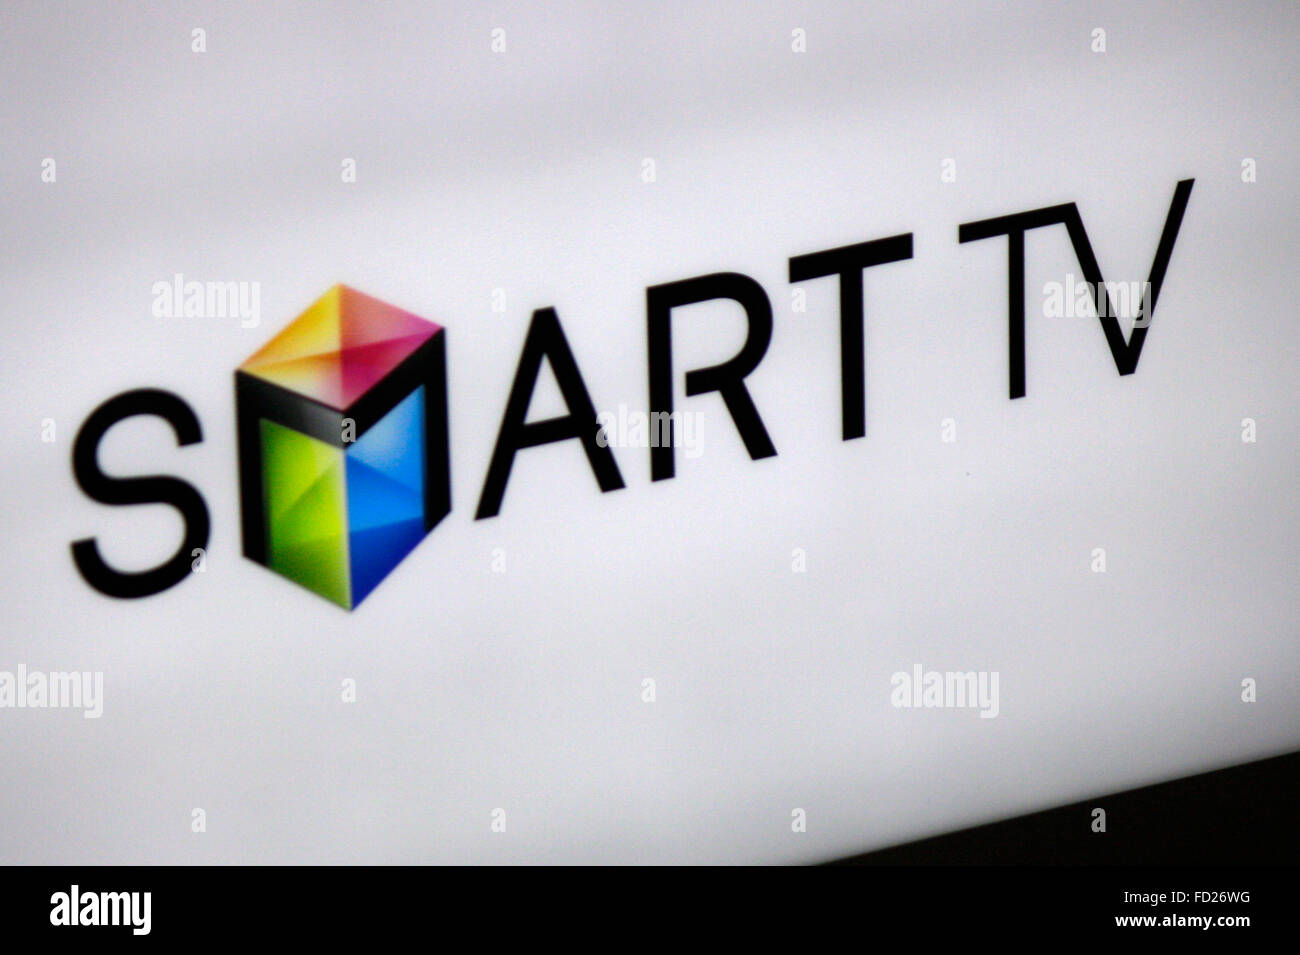 Markenname: "Samsung smart tv", Berlin. Stockfoto